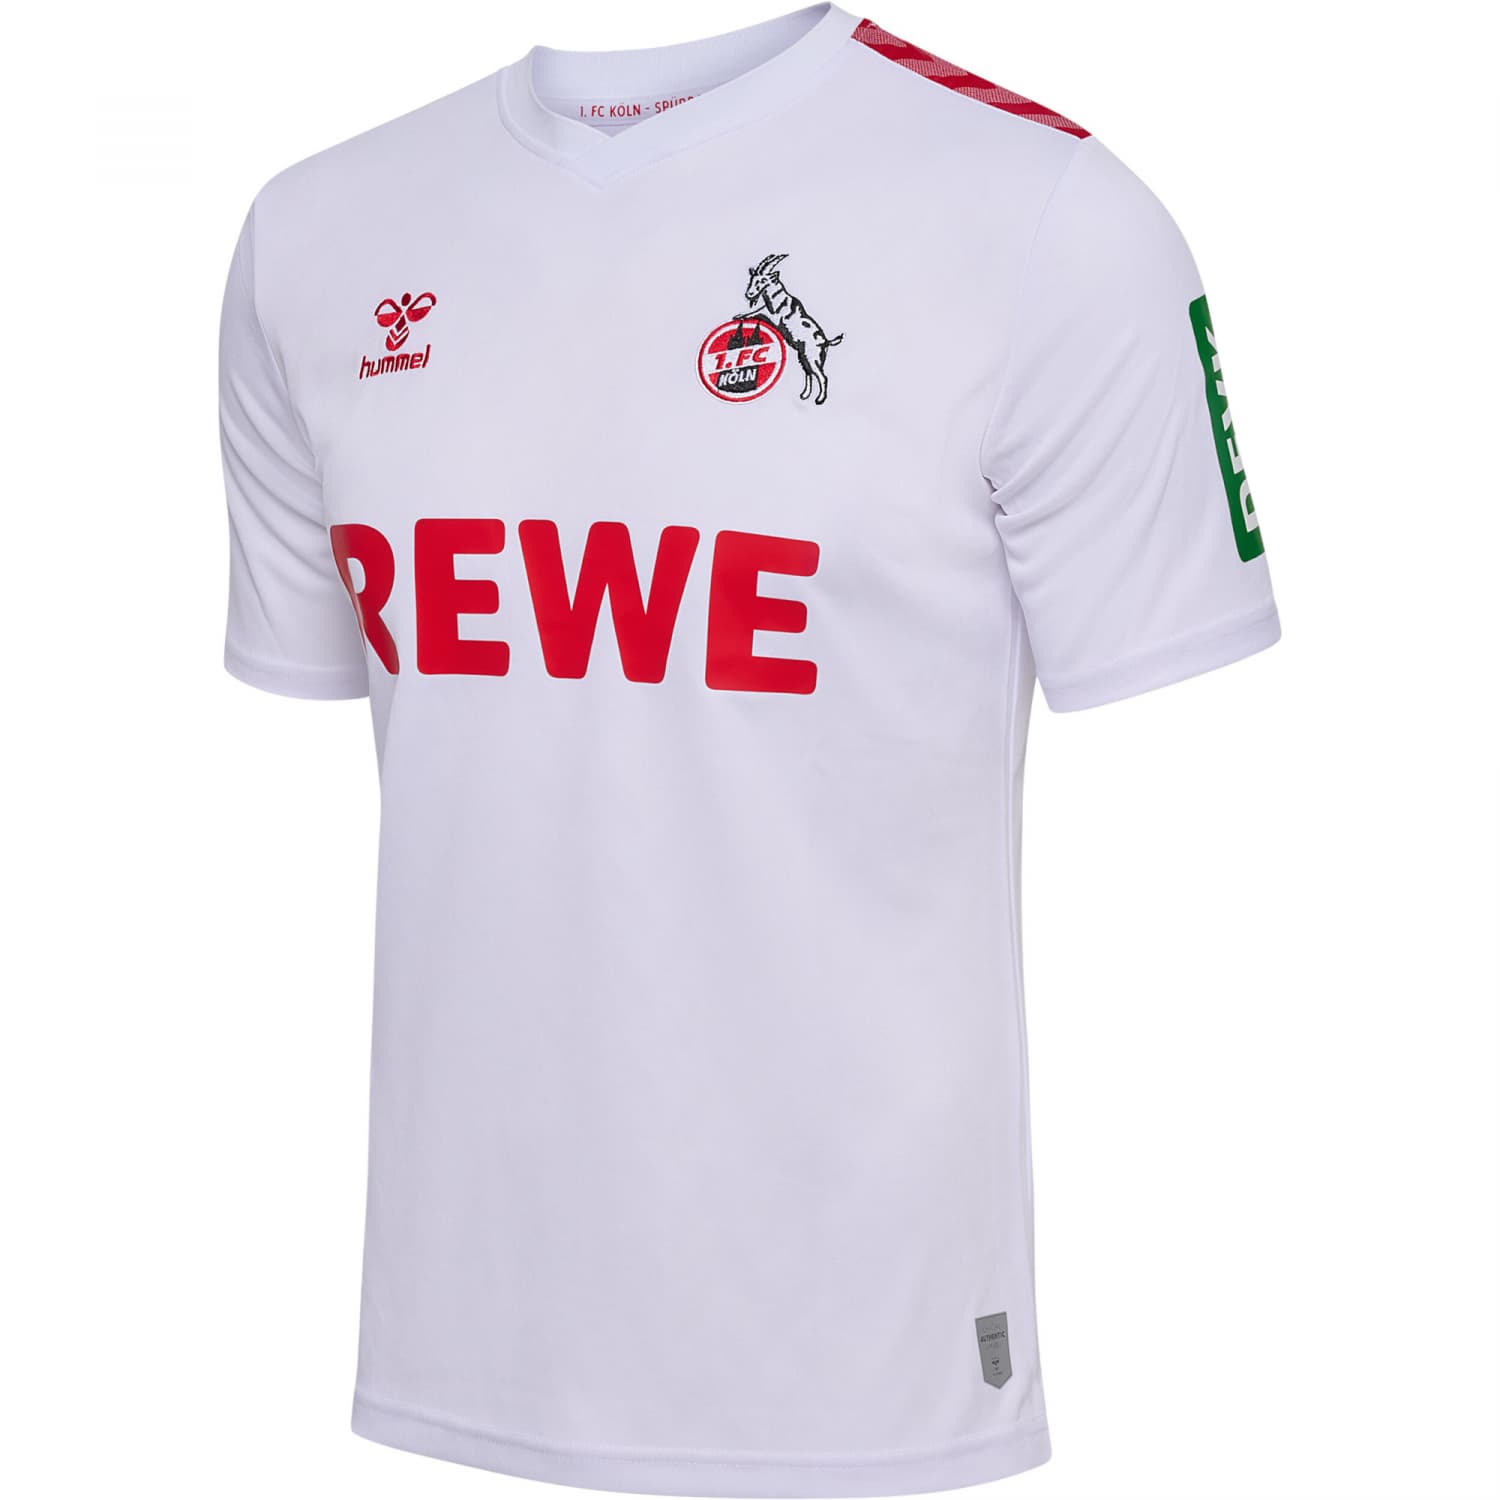 Hummel Kinder Home Trikot 1 FC Köln 23/24 221154-9402 140 White/True Red |  140